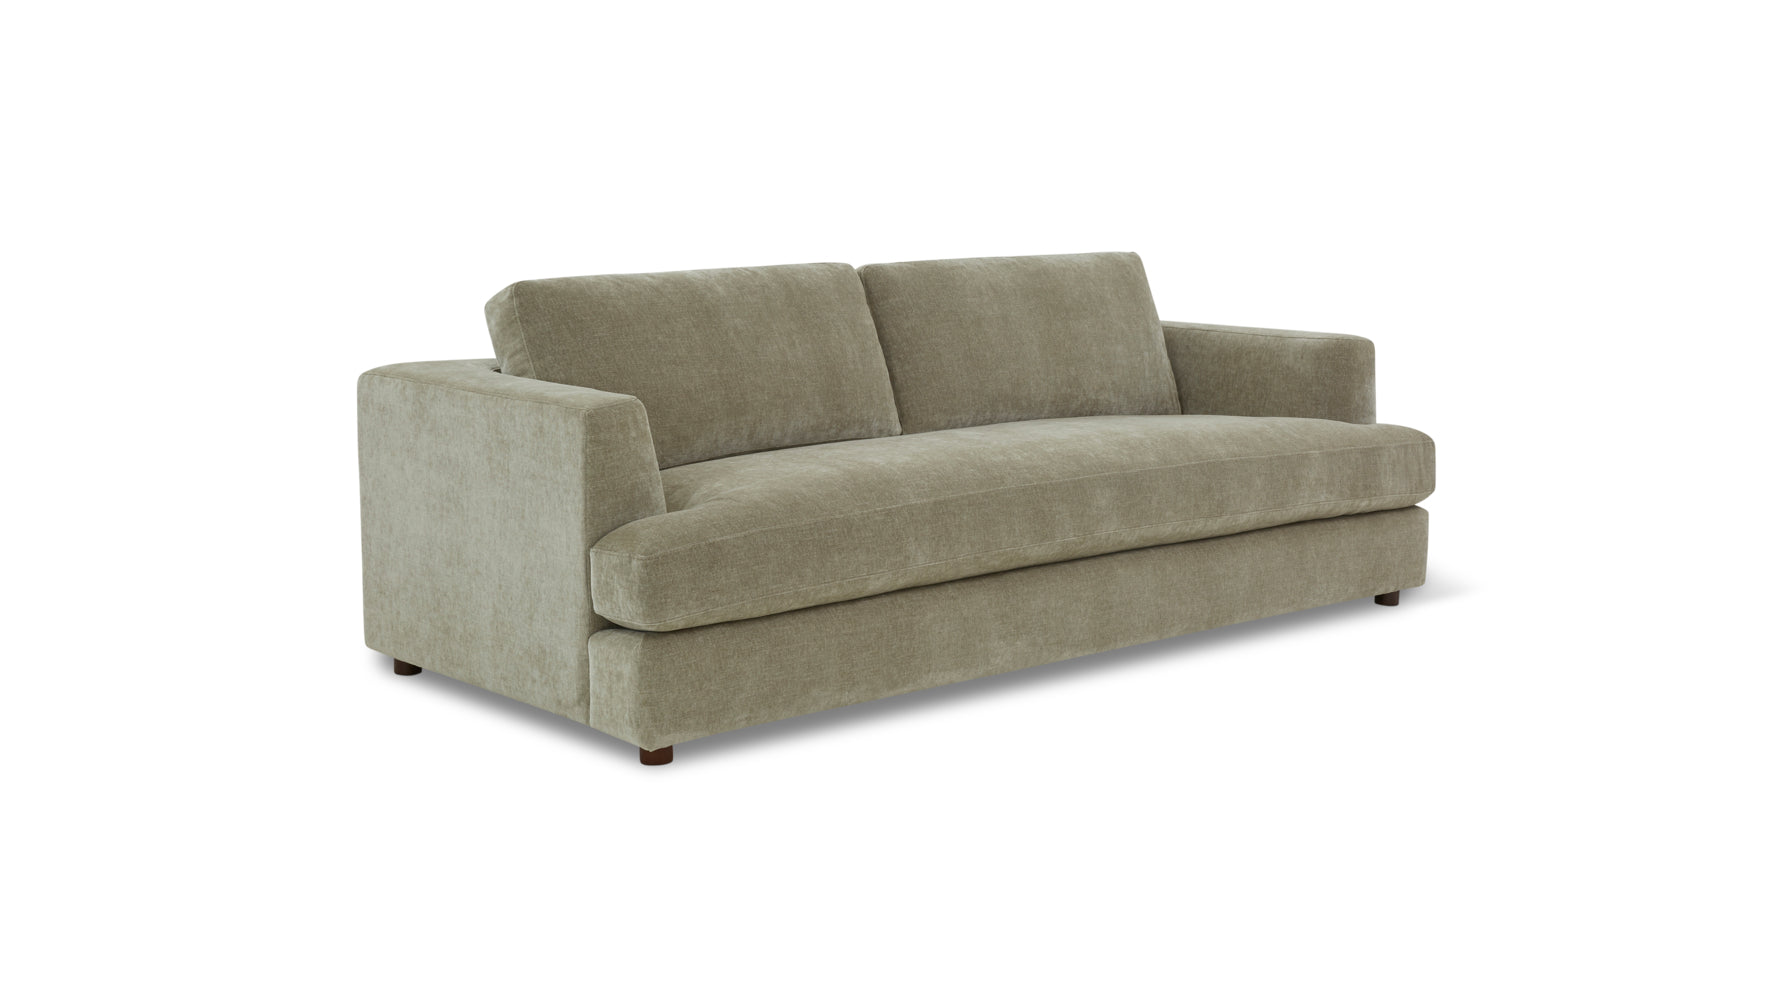 Good Company Sofa, 3 Seater, Artichoke - Image 2